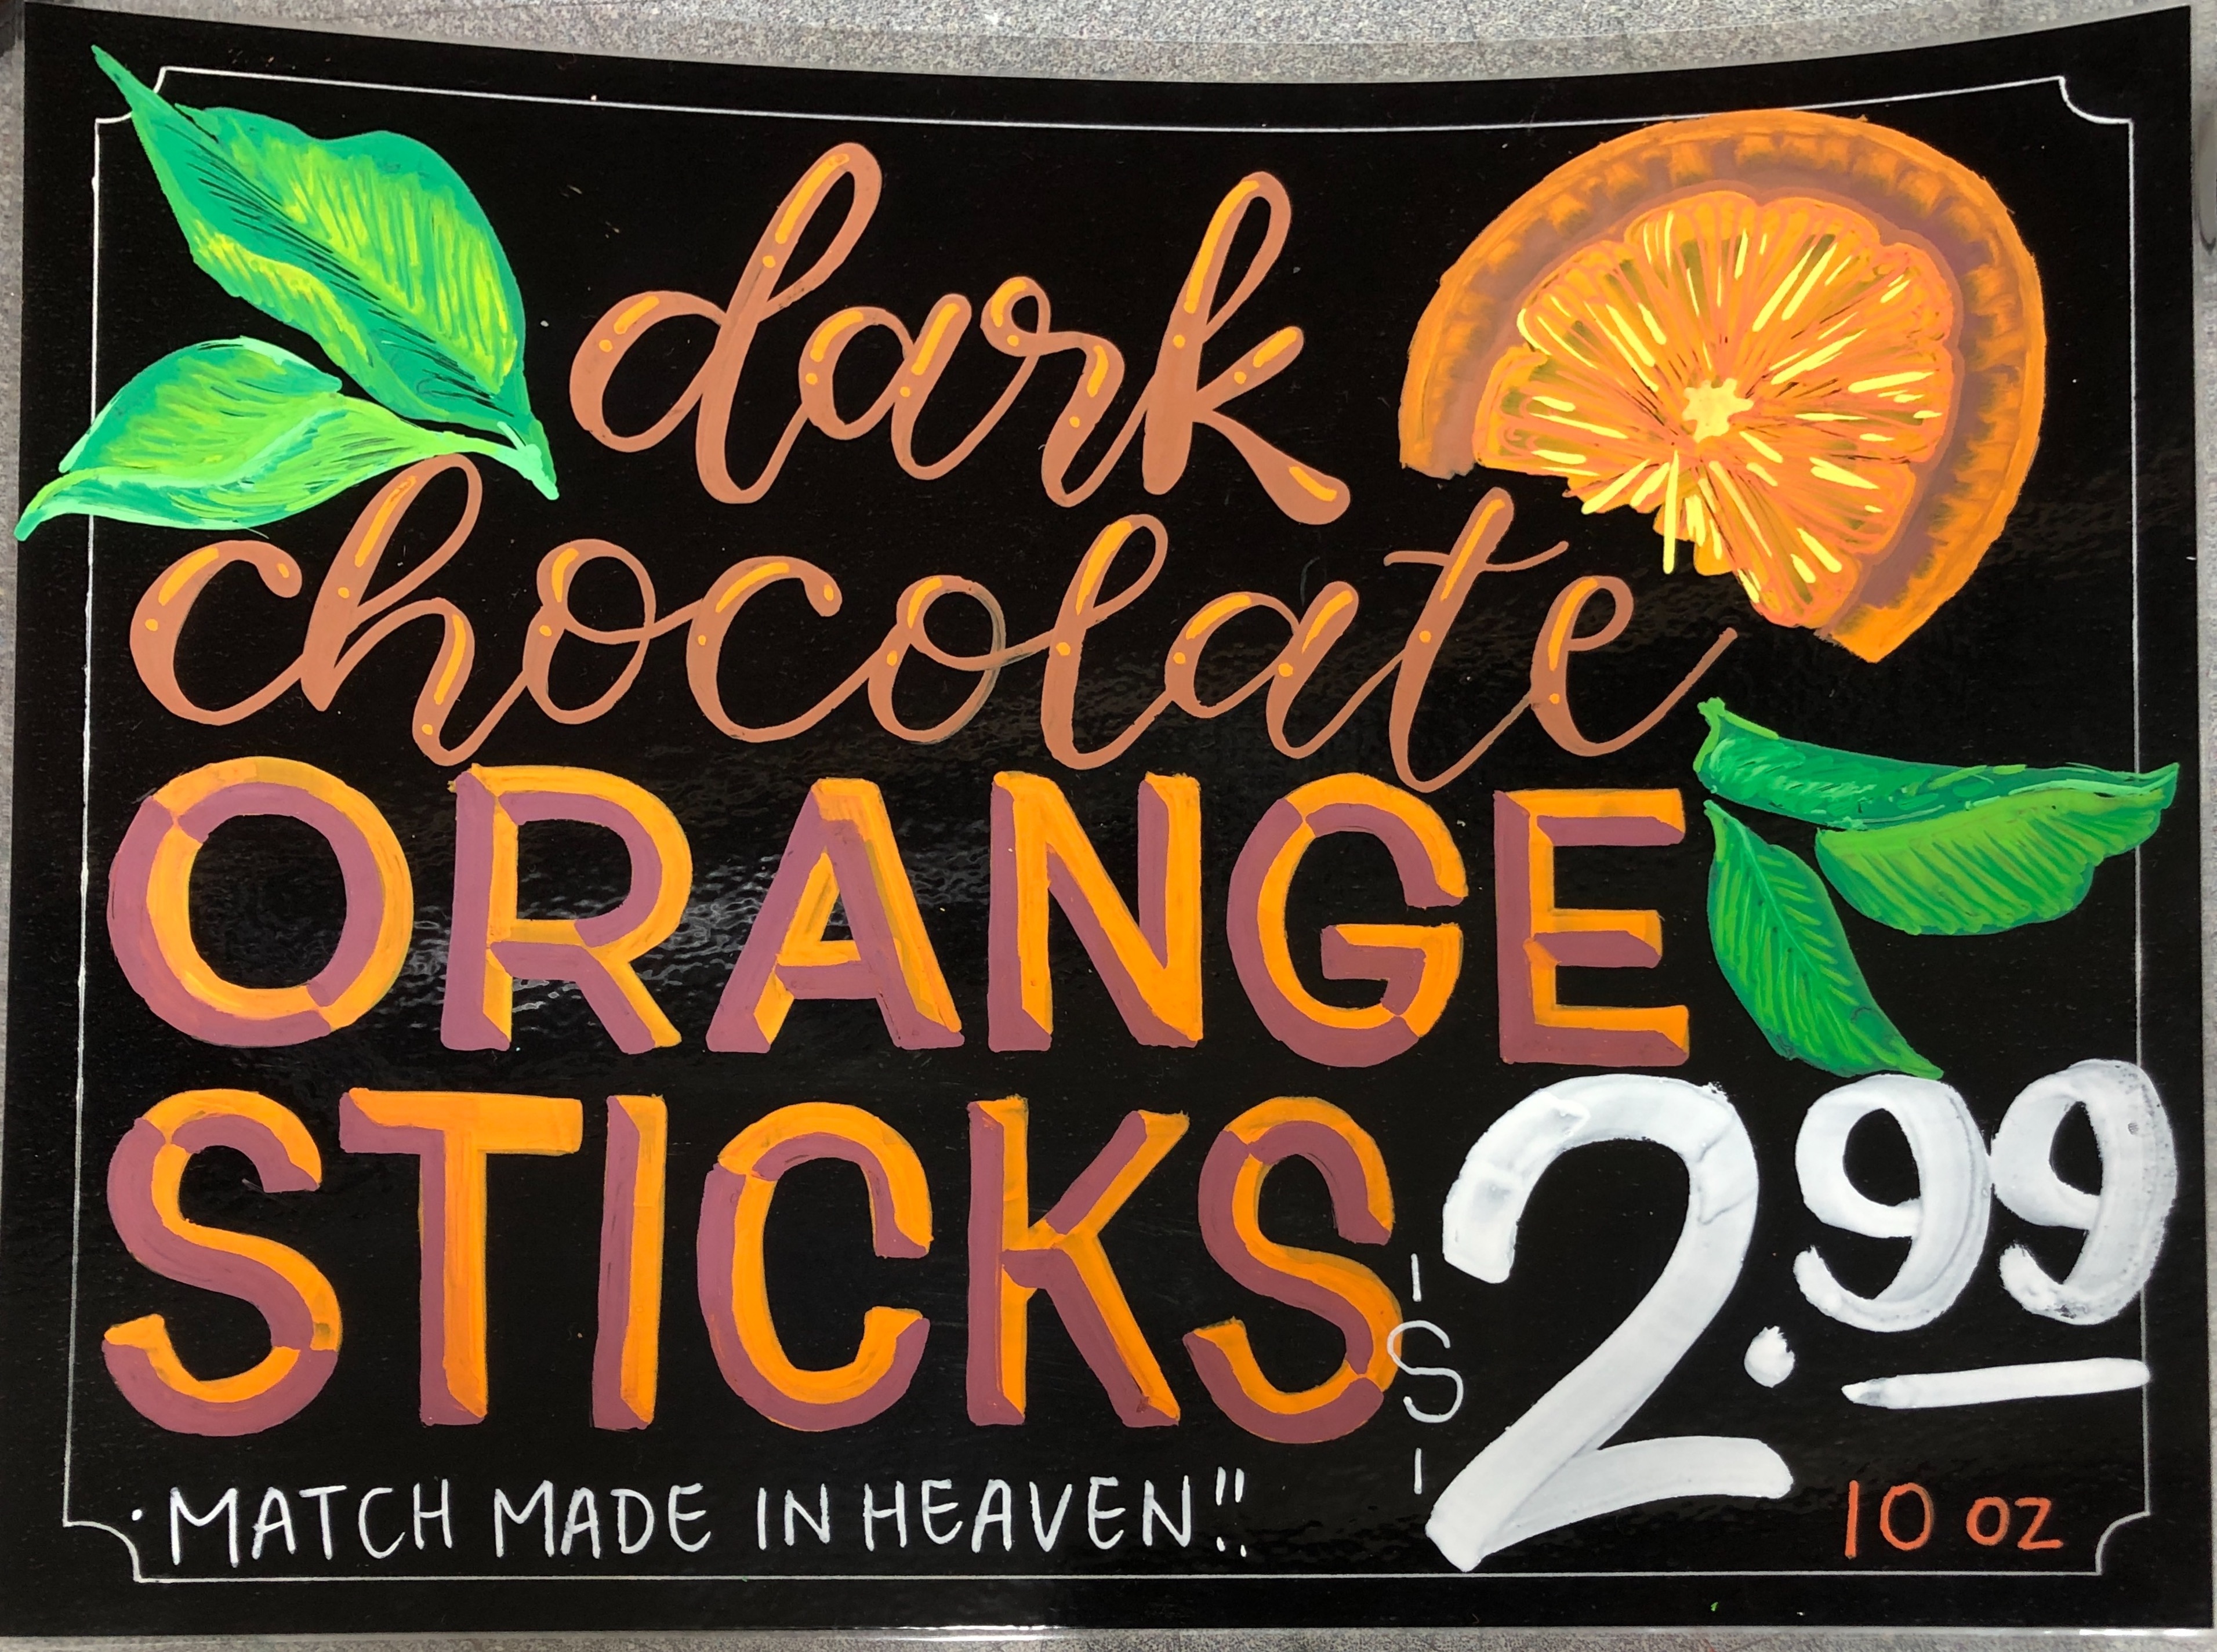 Dark Chocolate Orange Sticks sign